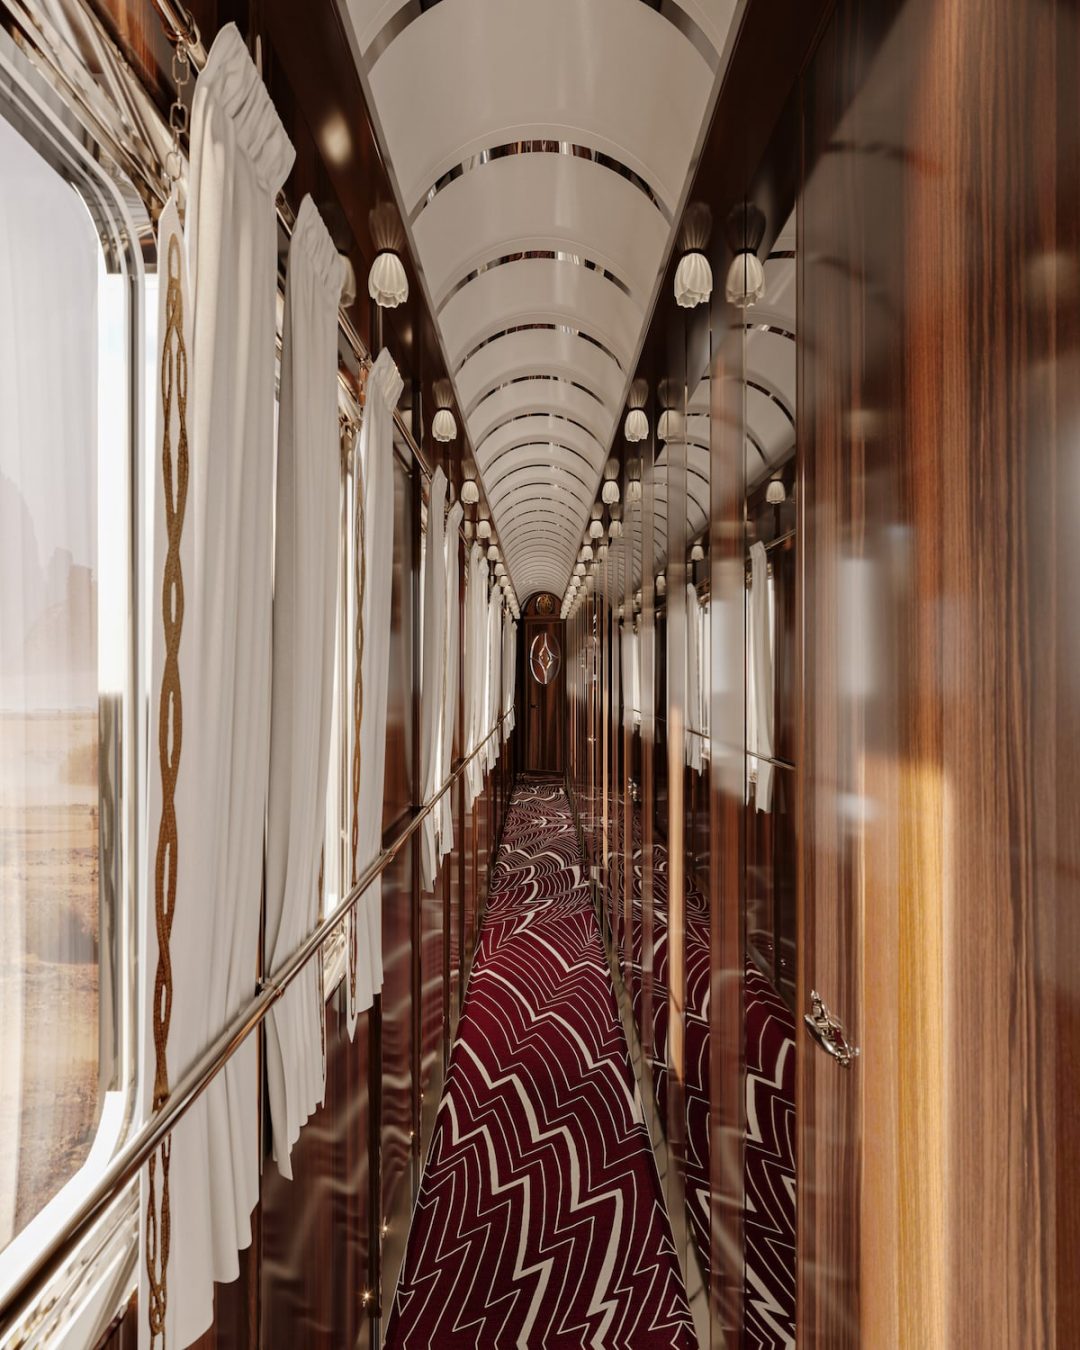 Orient Express restaurato. I corridoi